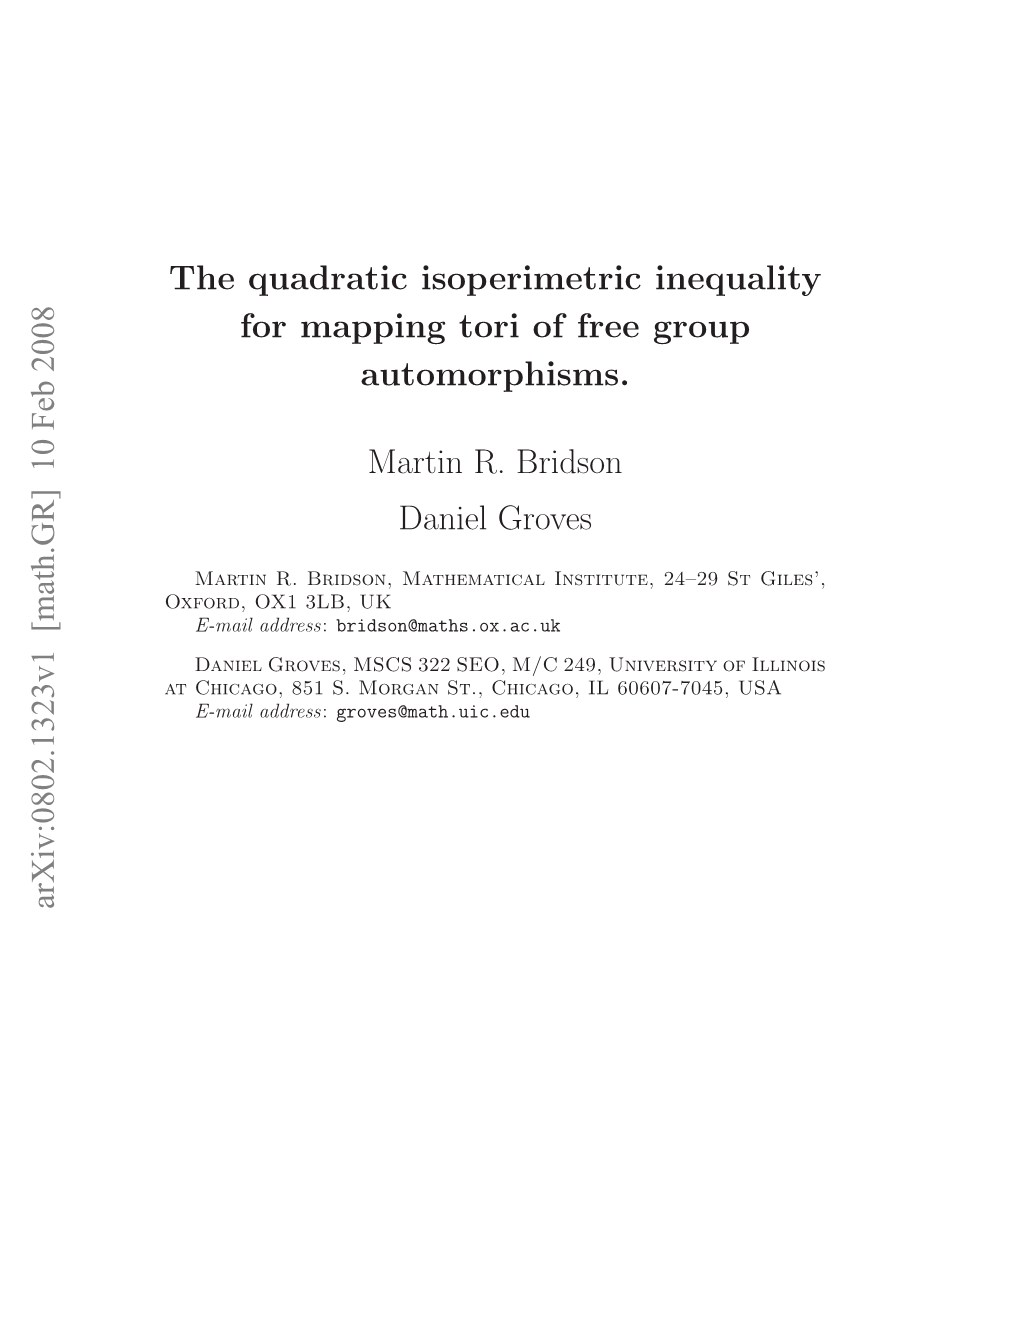 The Quadratic Isoperimetric Inequality for Mapping Tori of Free Group